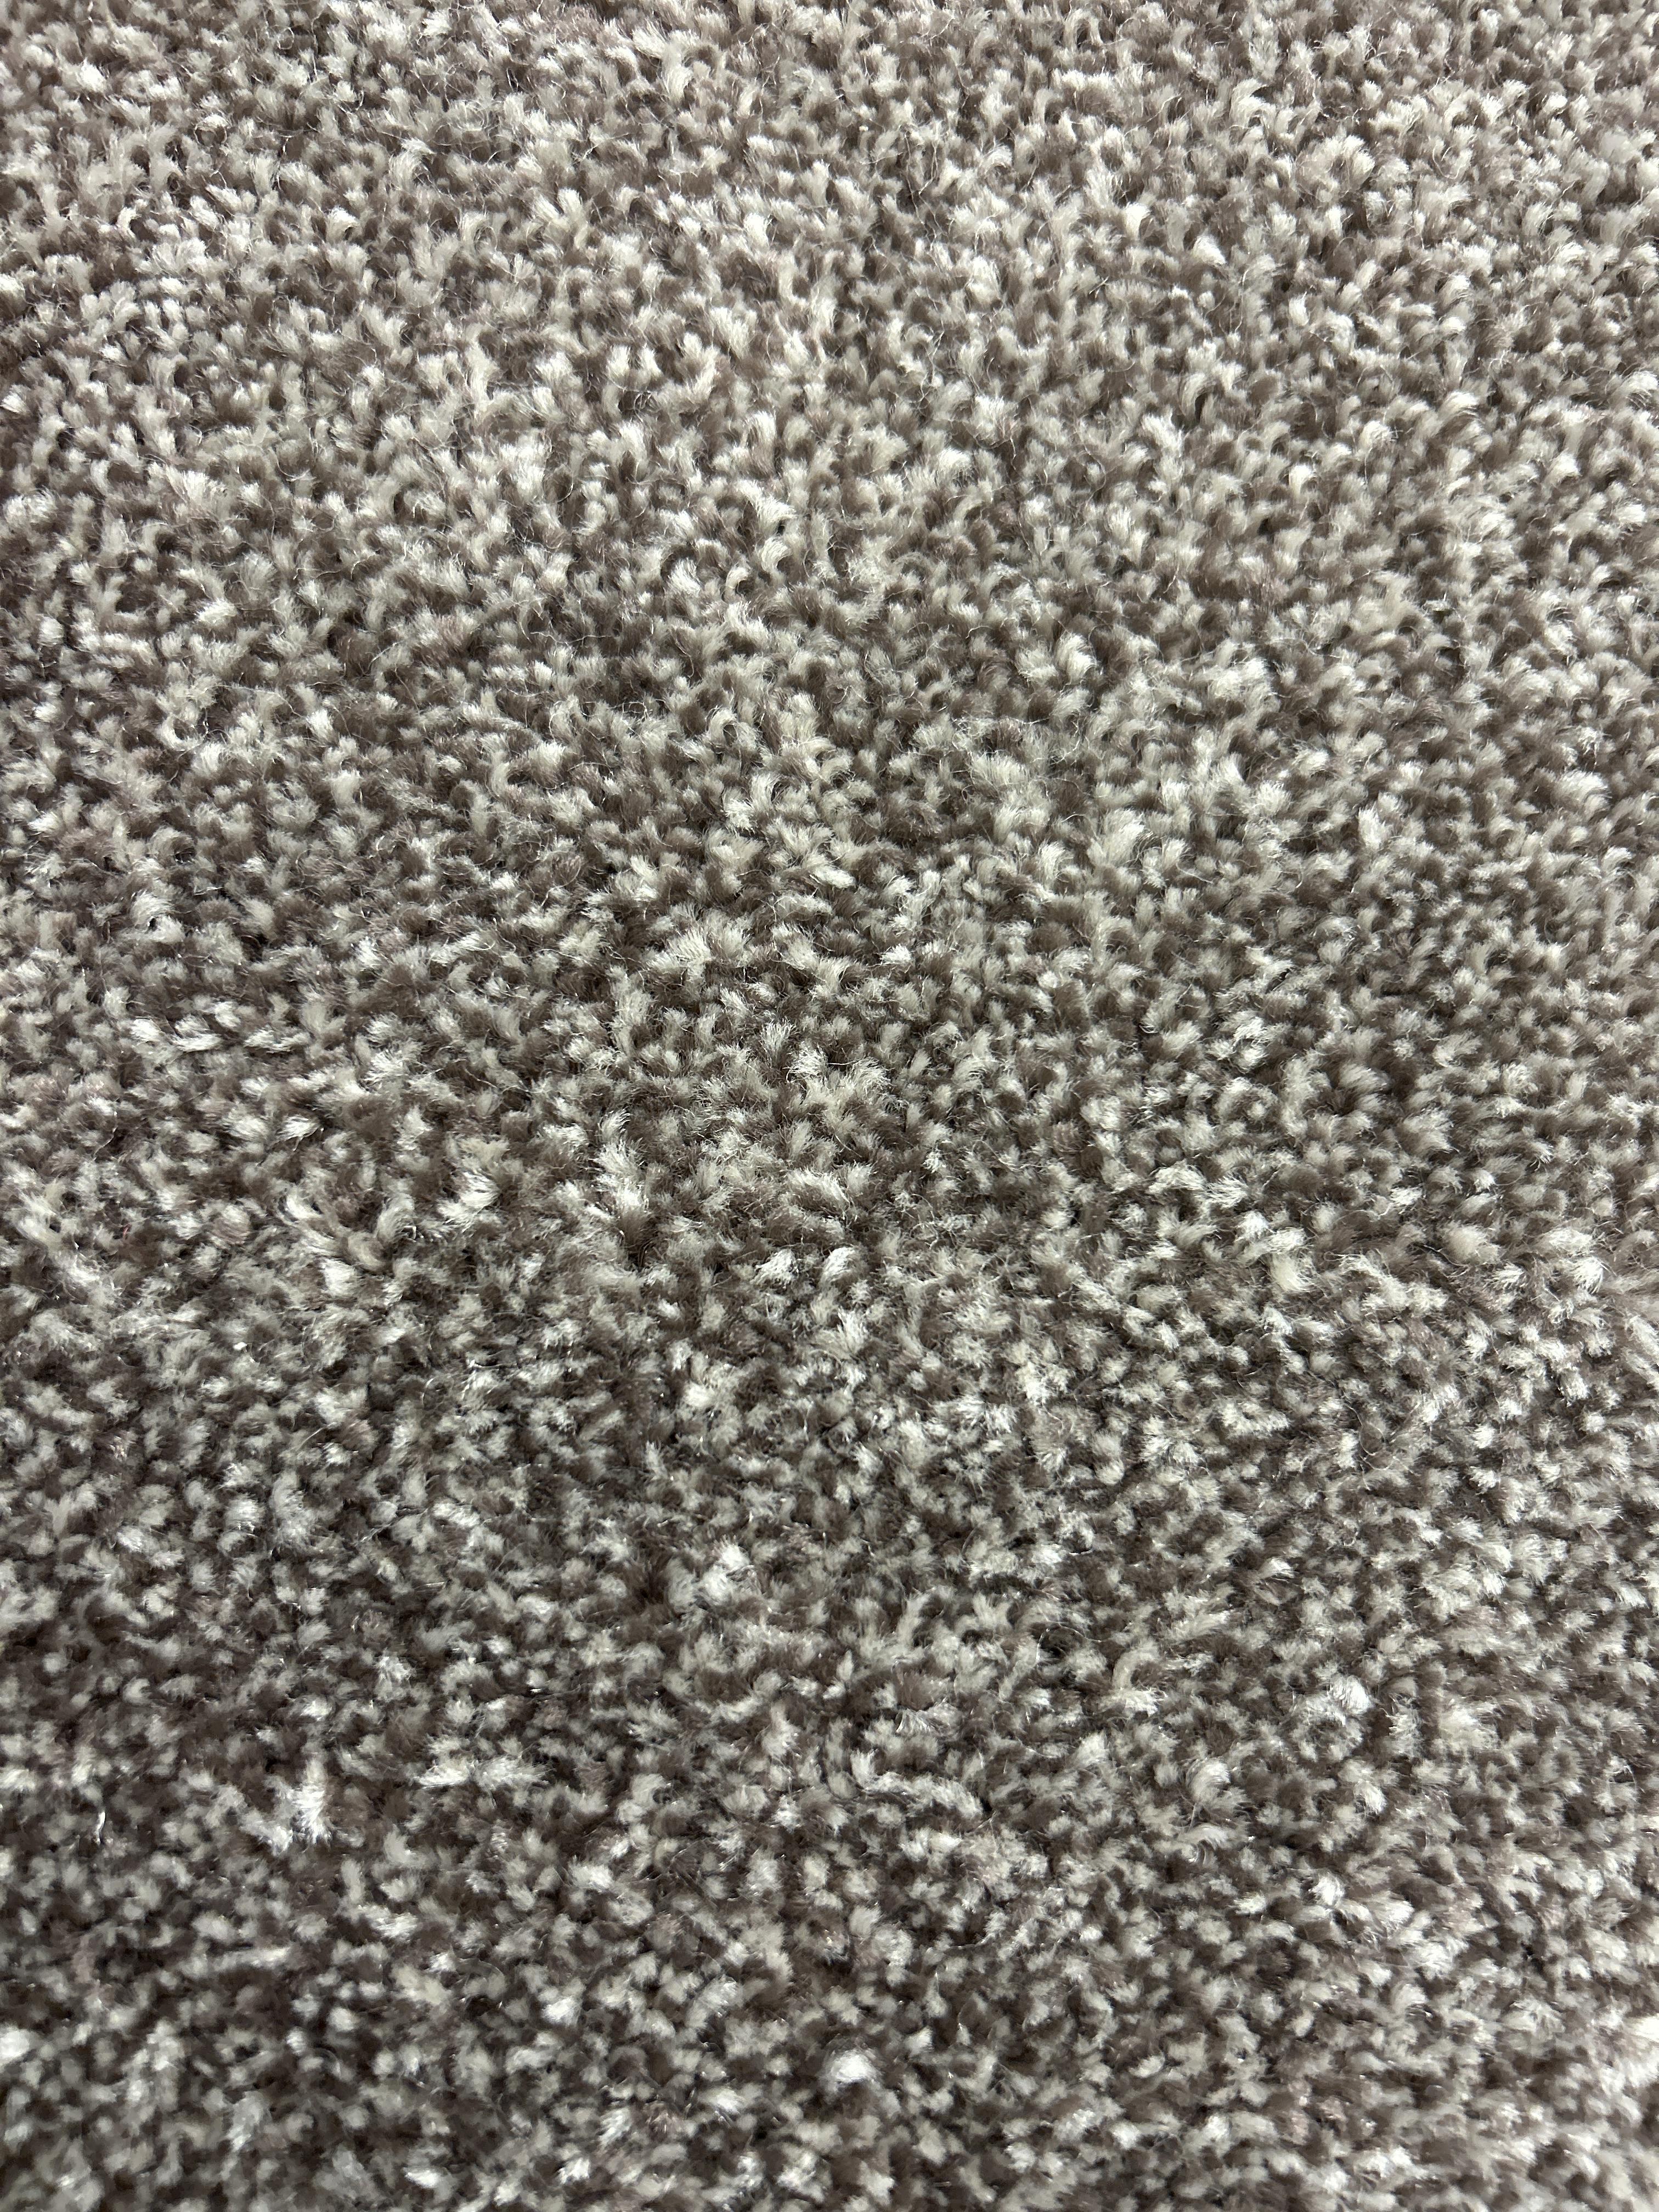 San diego carpet range